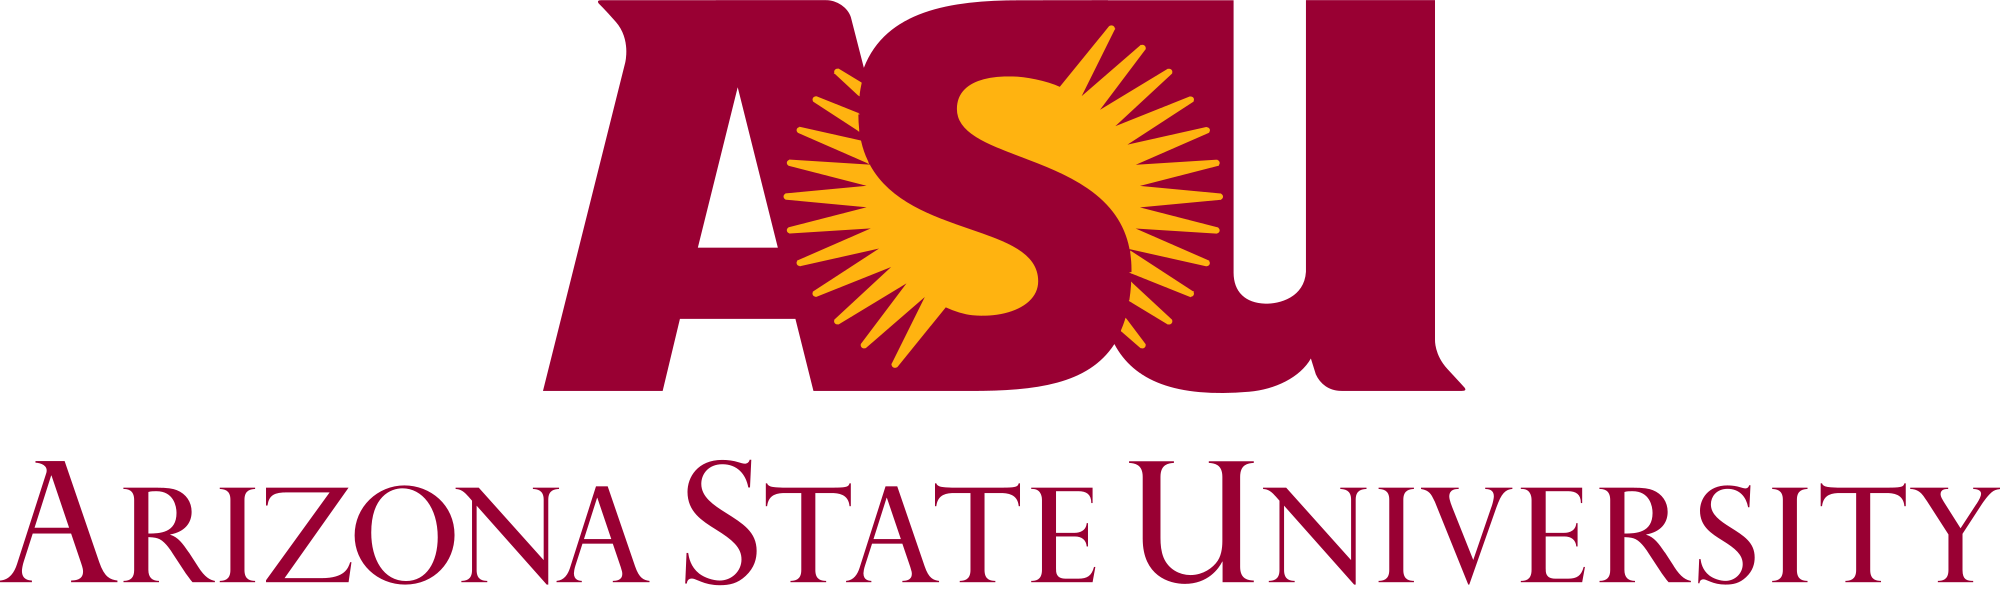 Asu Old Logo - File:Arizona State University old signature.svg - Wikimedia Commons